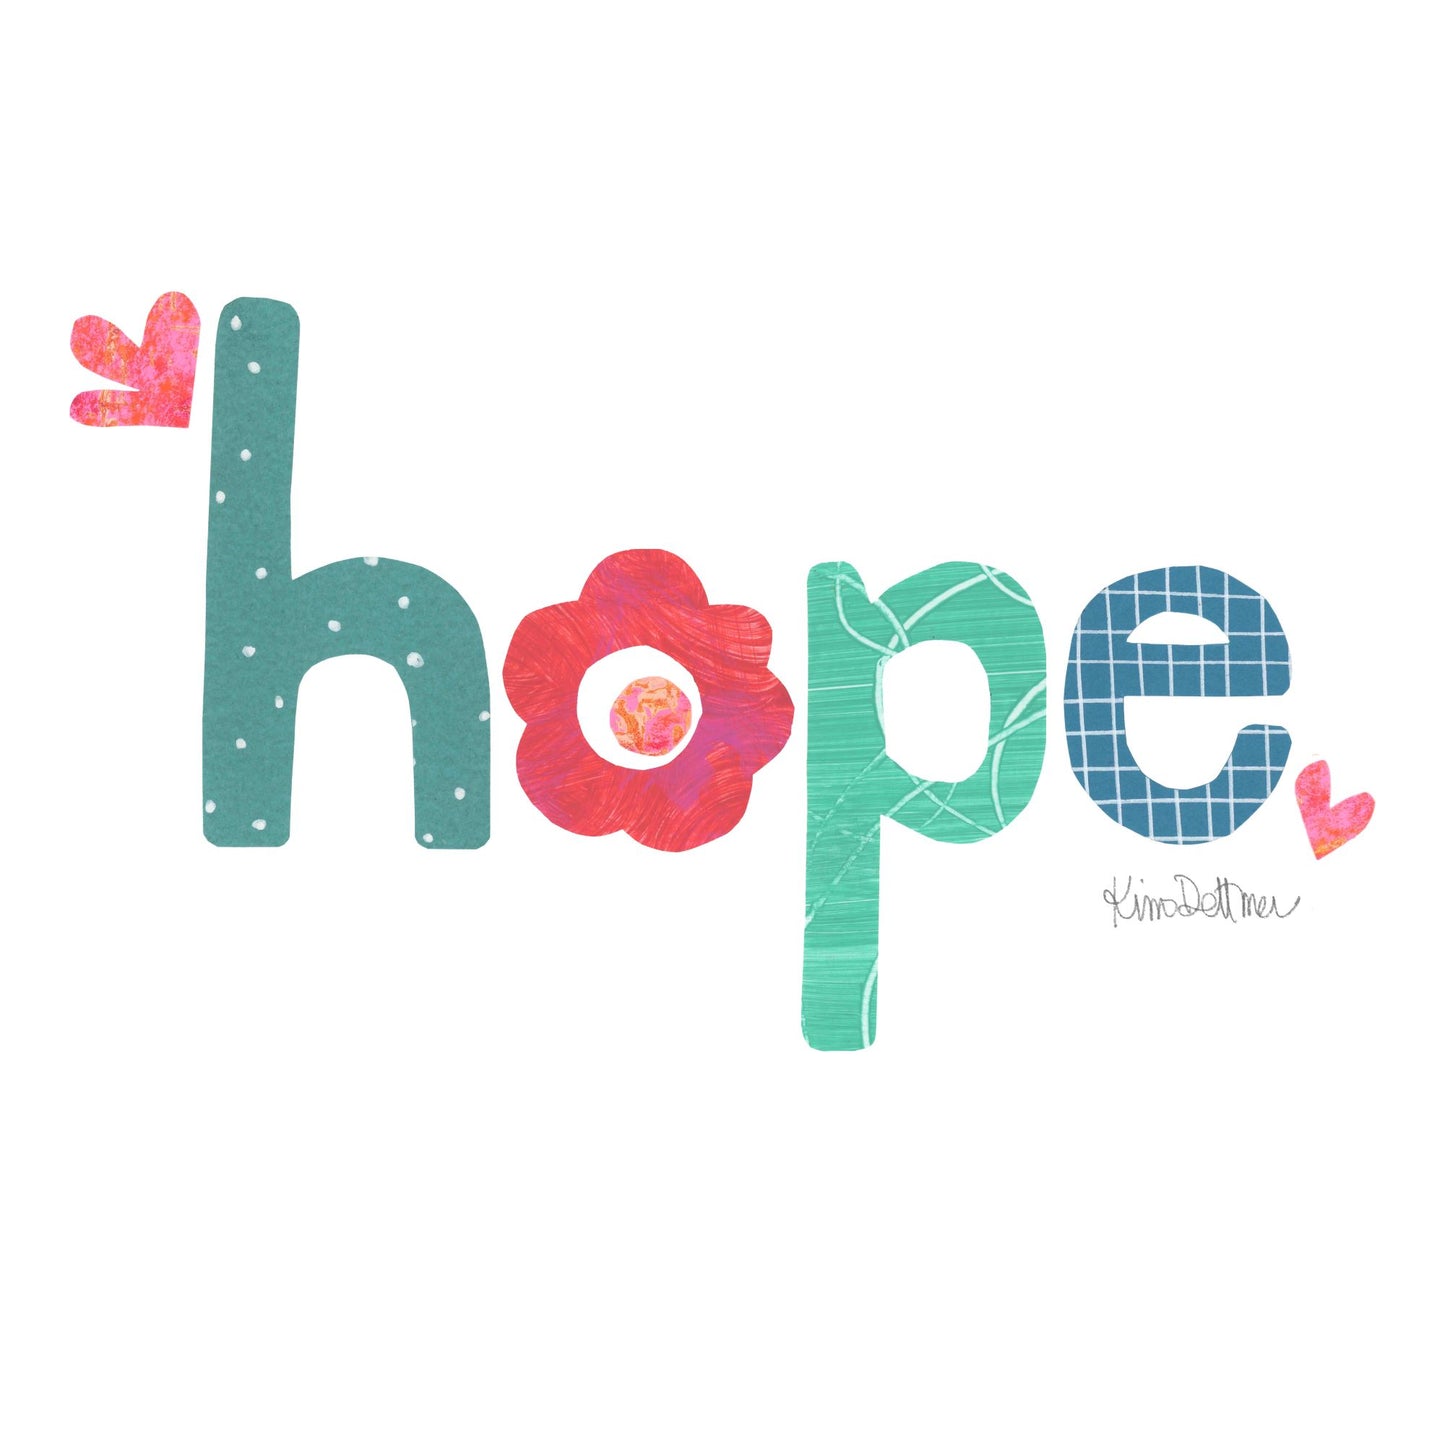 Hope 1 - Hope Springs (ORIGINAL)